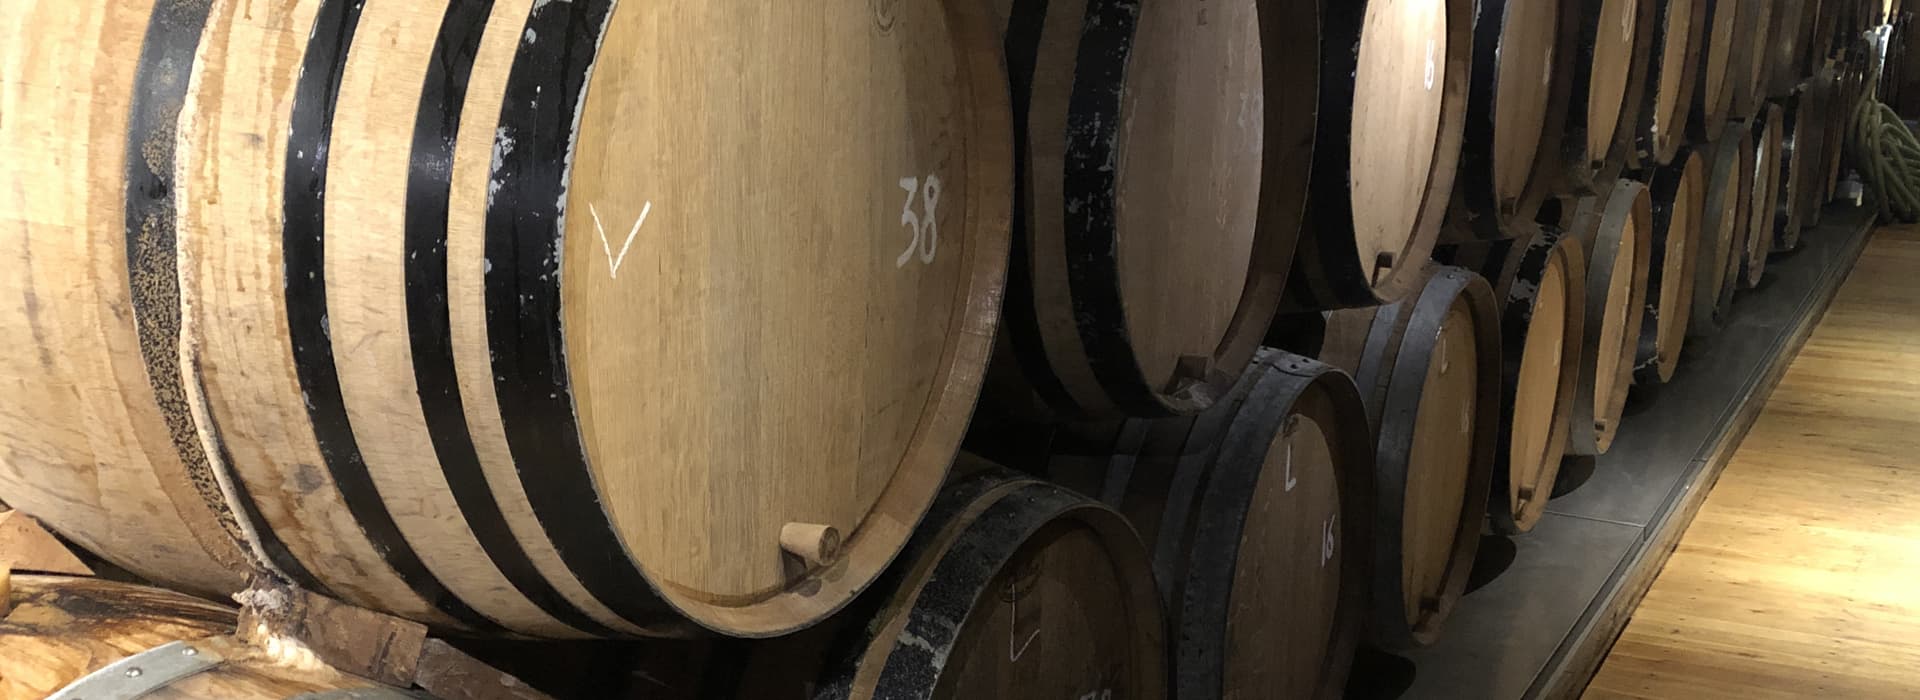 Lambic aging in barrels at Cantillon